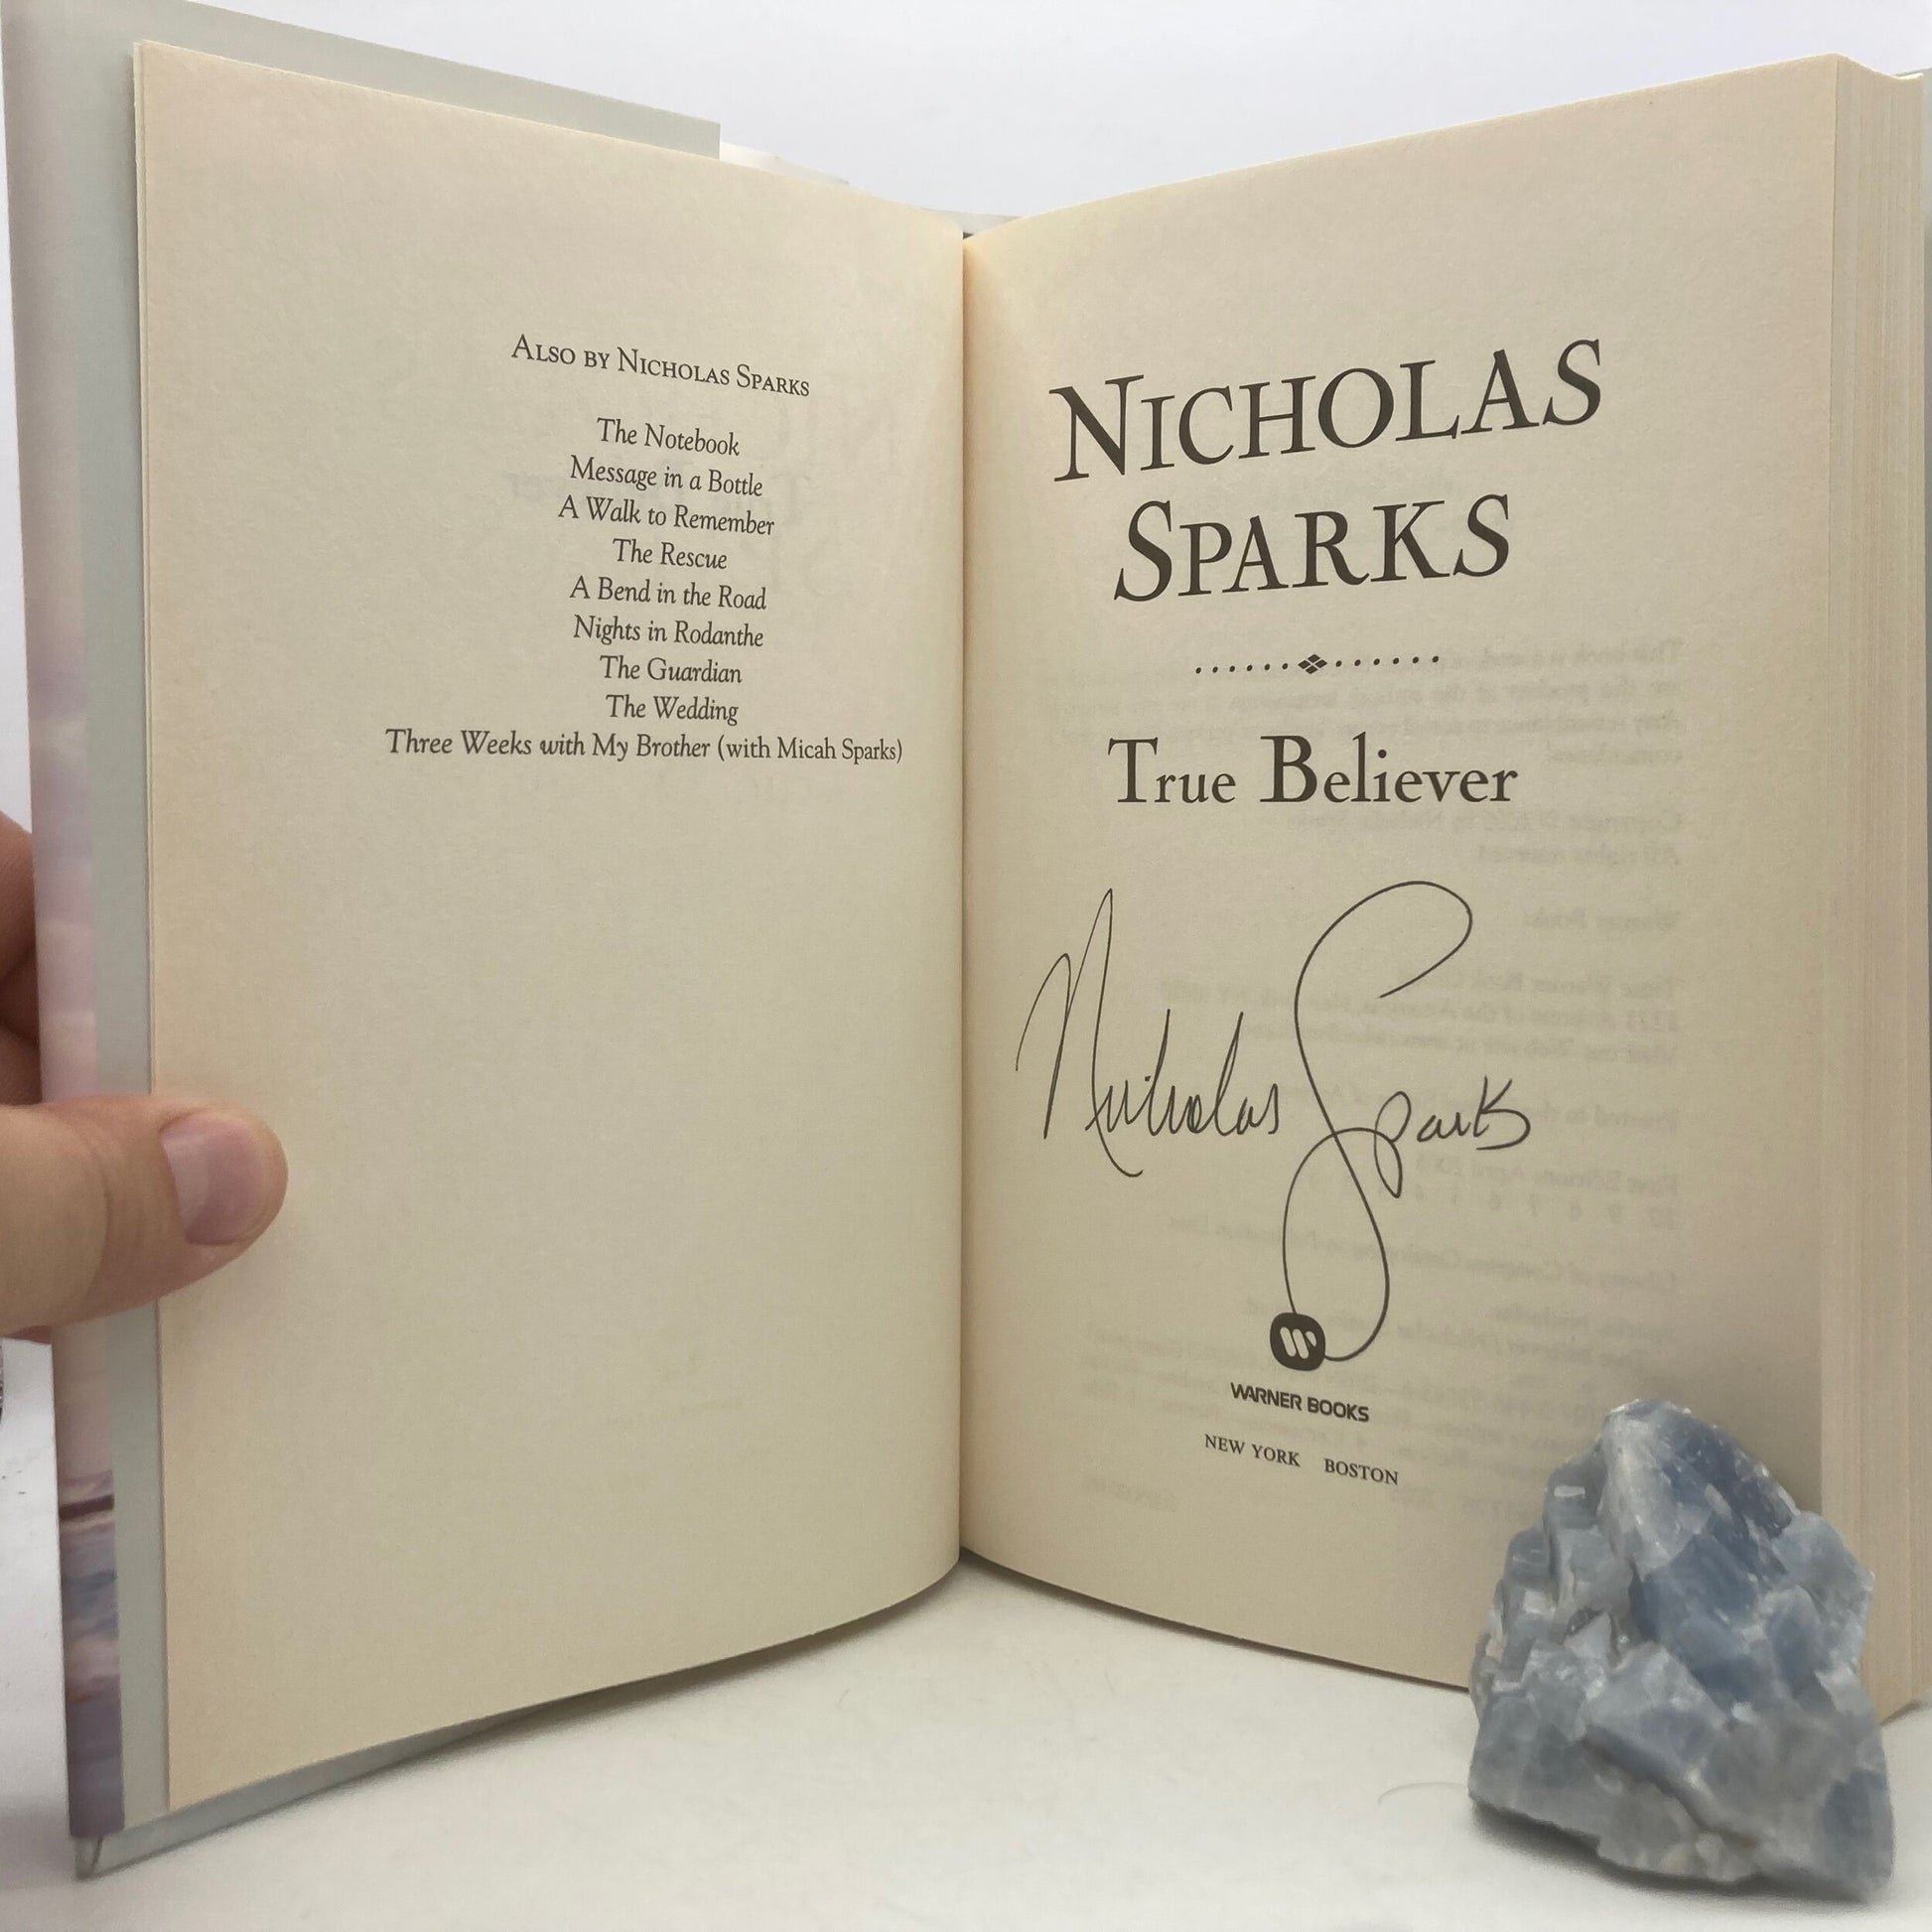 SPARKS, Nicholas "True Believer" [Warner, 2005] 1st Edition (Signed) - Buzz Bookstore